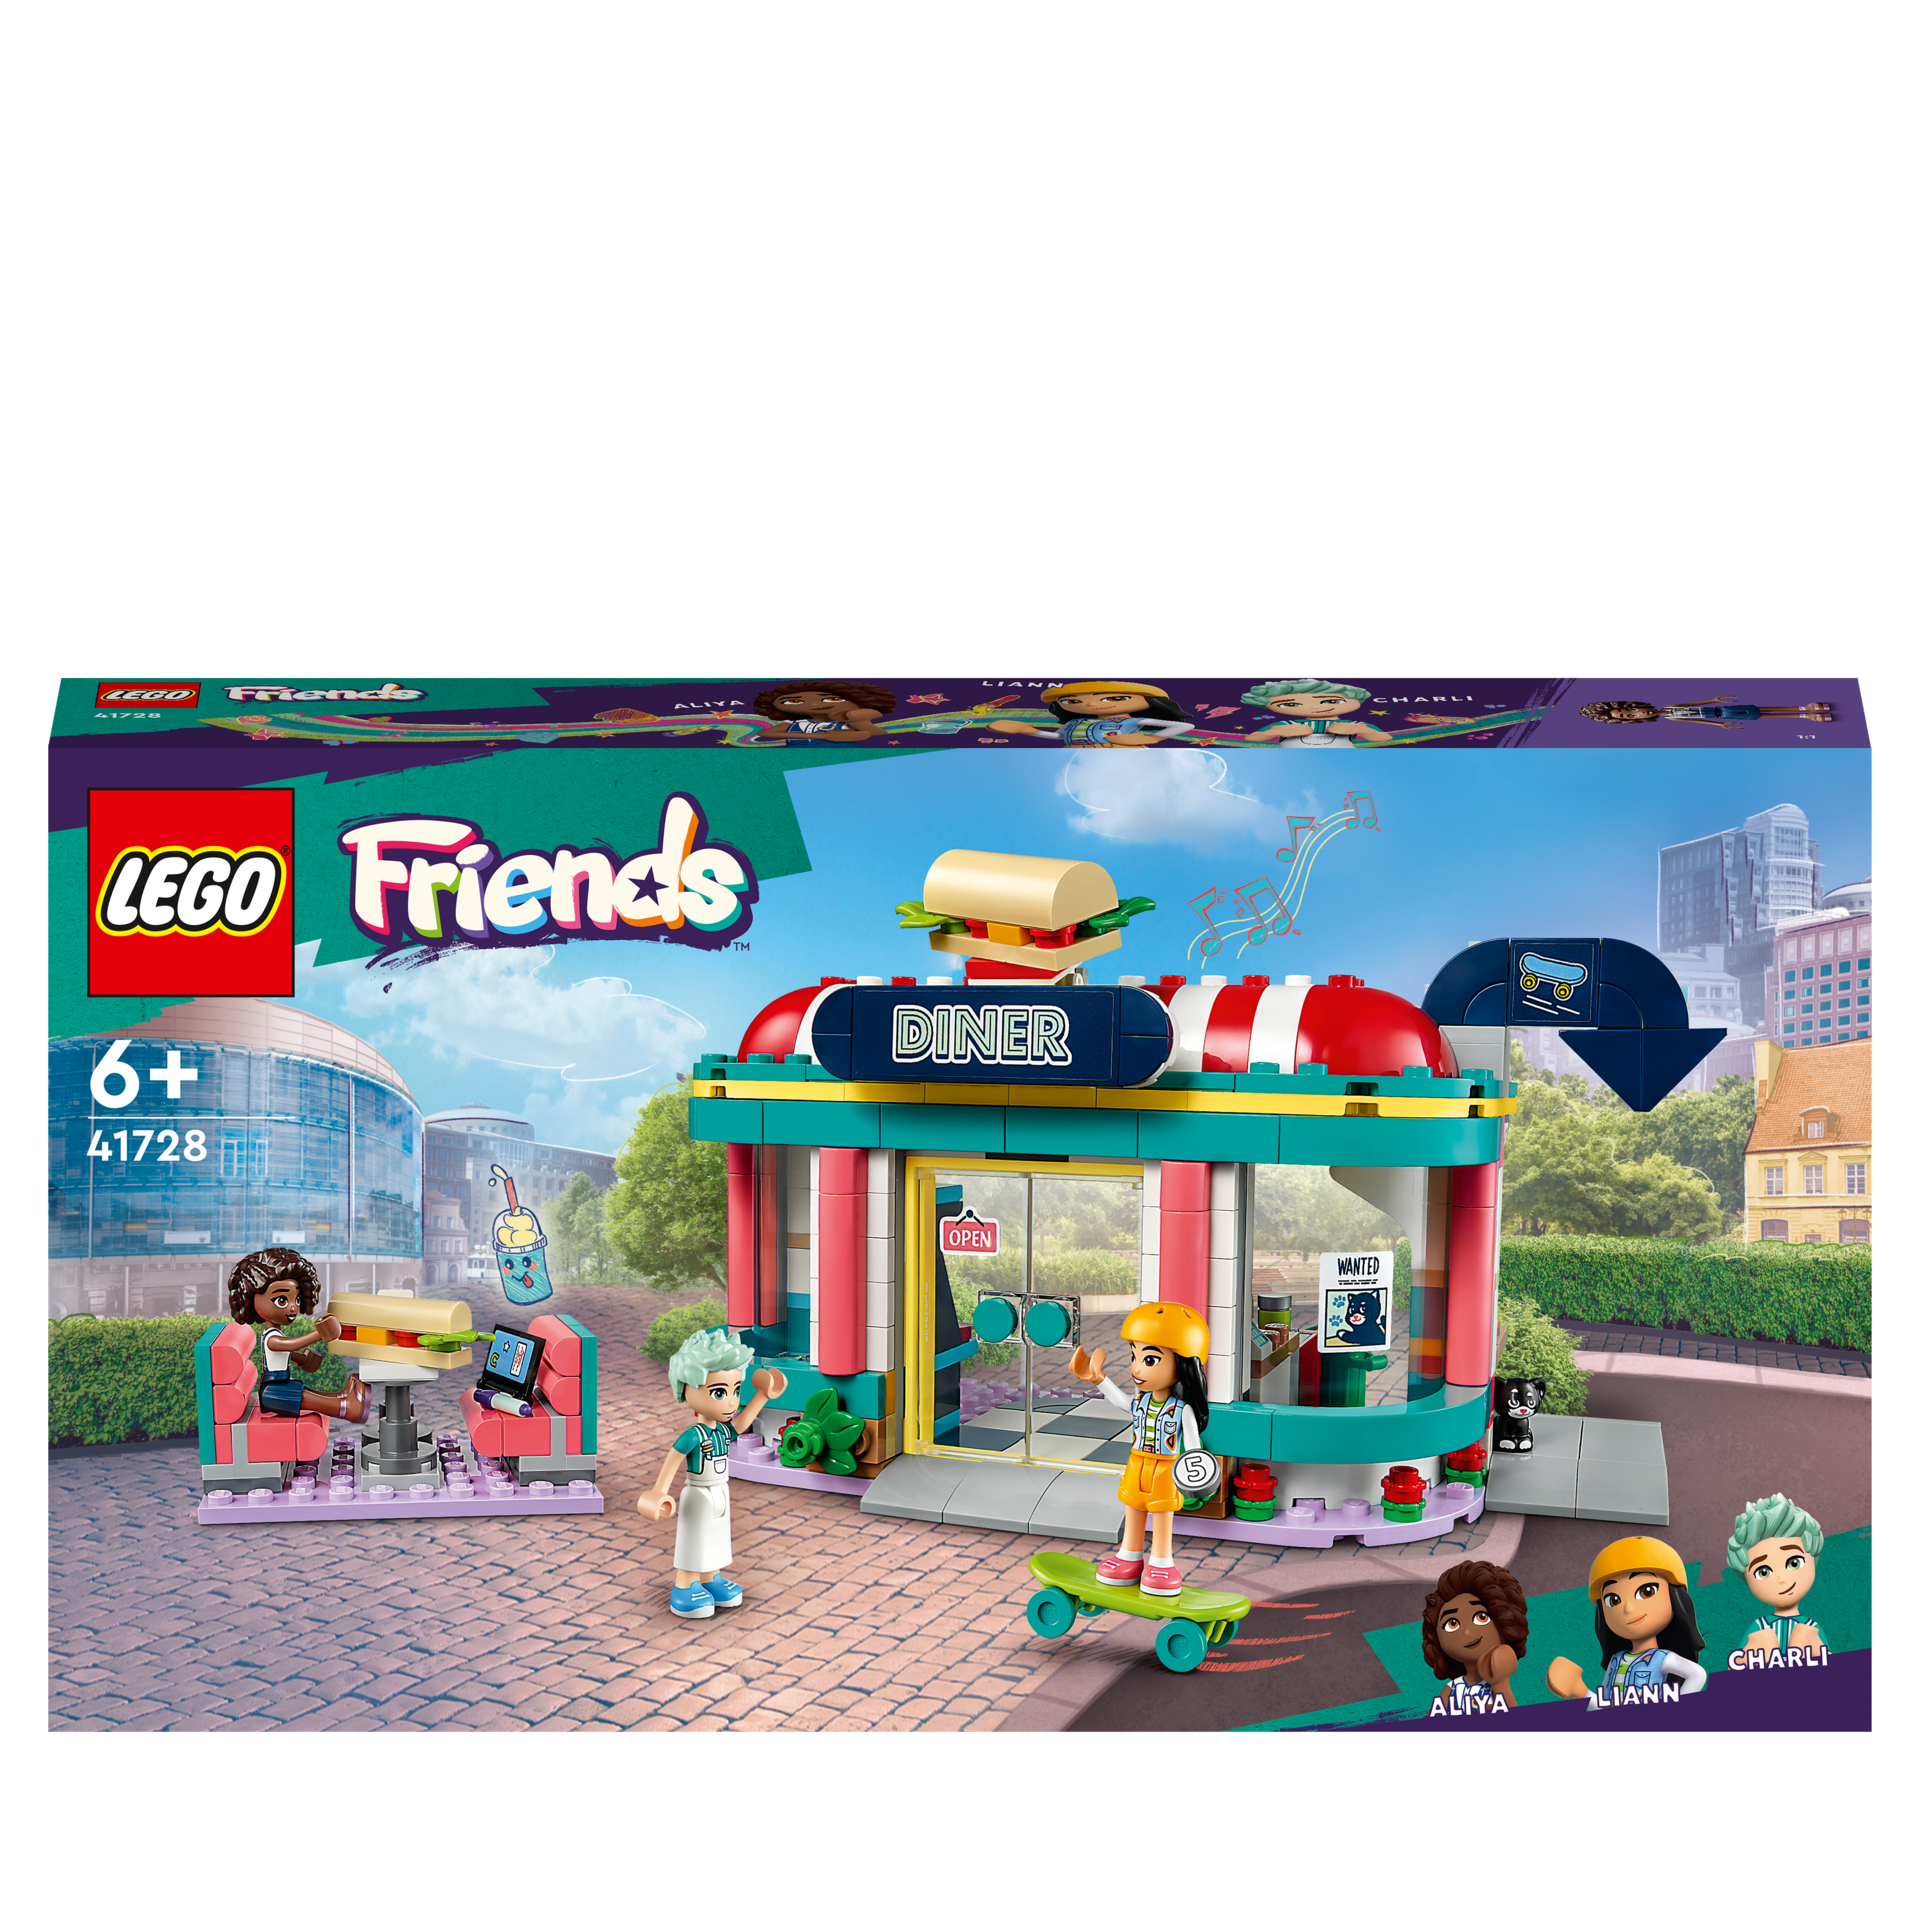 Lego Friends Hotel pas cher - Achat neuf et occasion